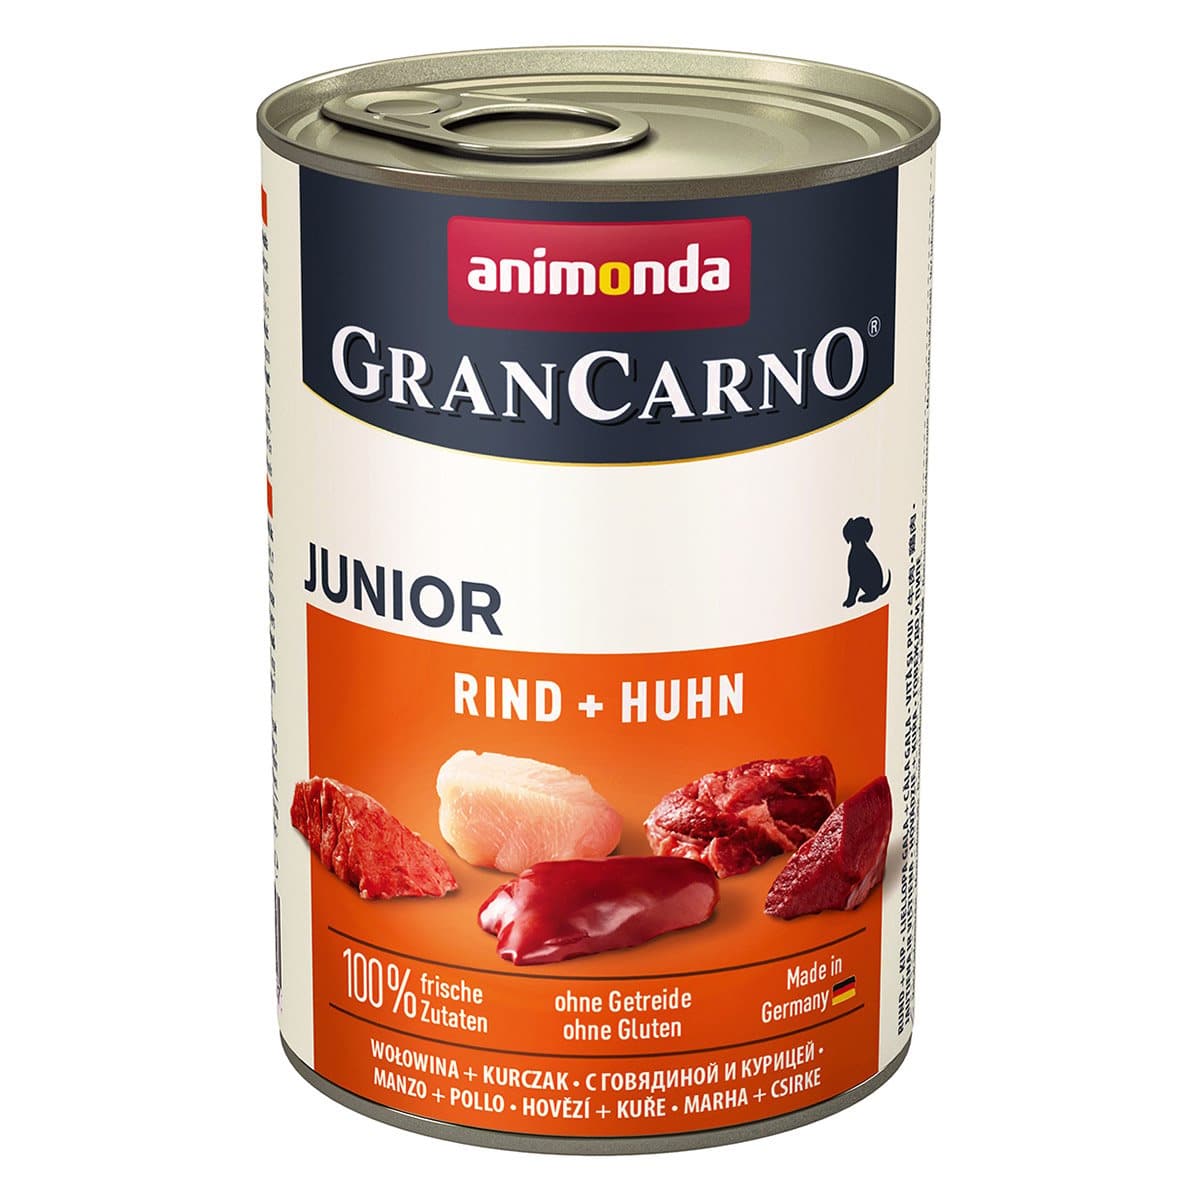 animonda GranCarno Junior Rind und Huhn 6x400g